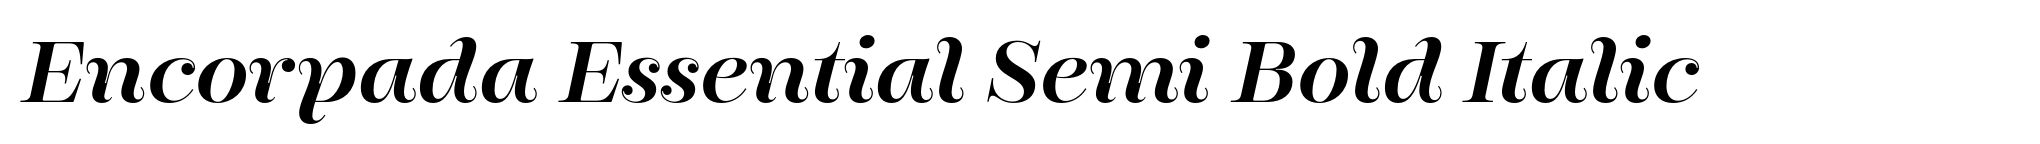 Encorpada Essential Semi Bold Italic image